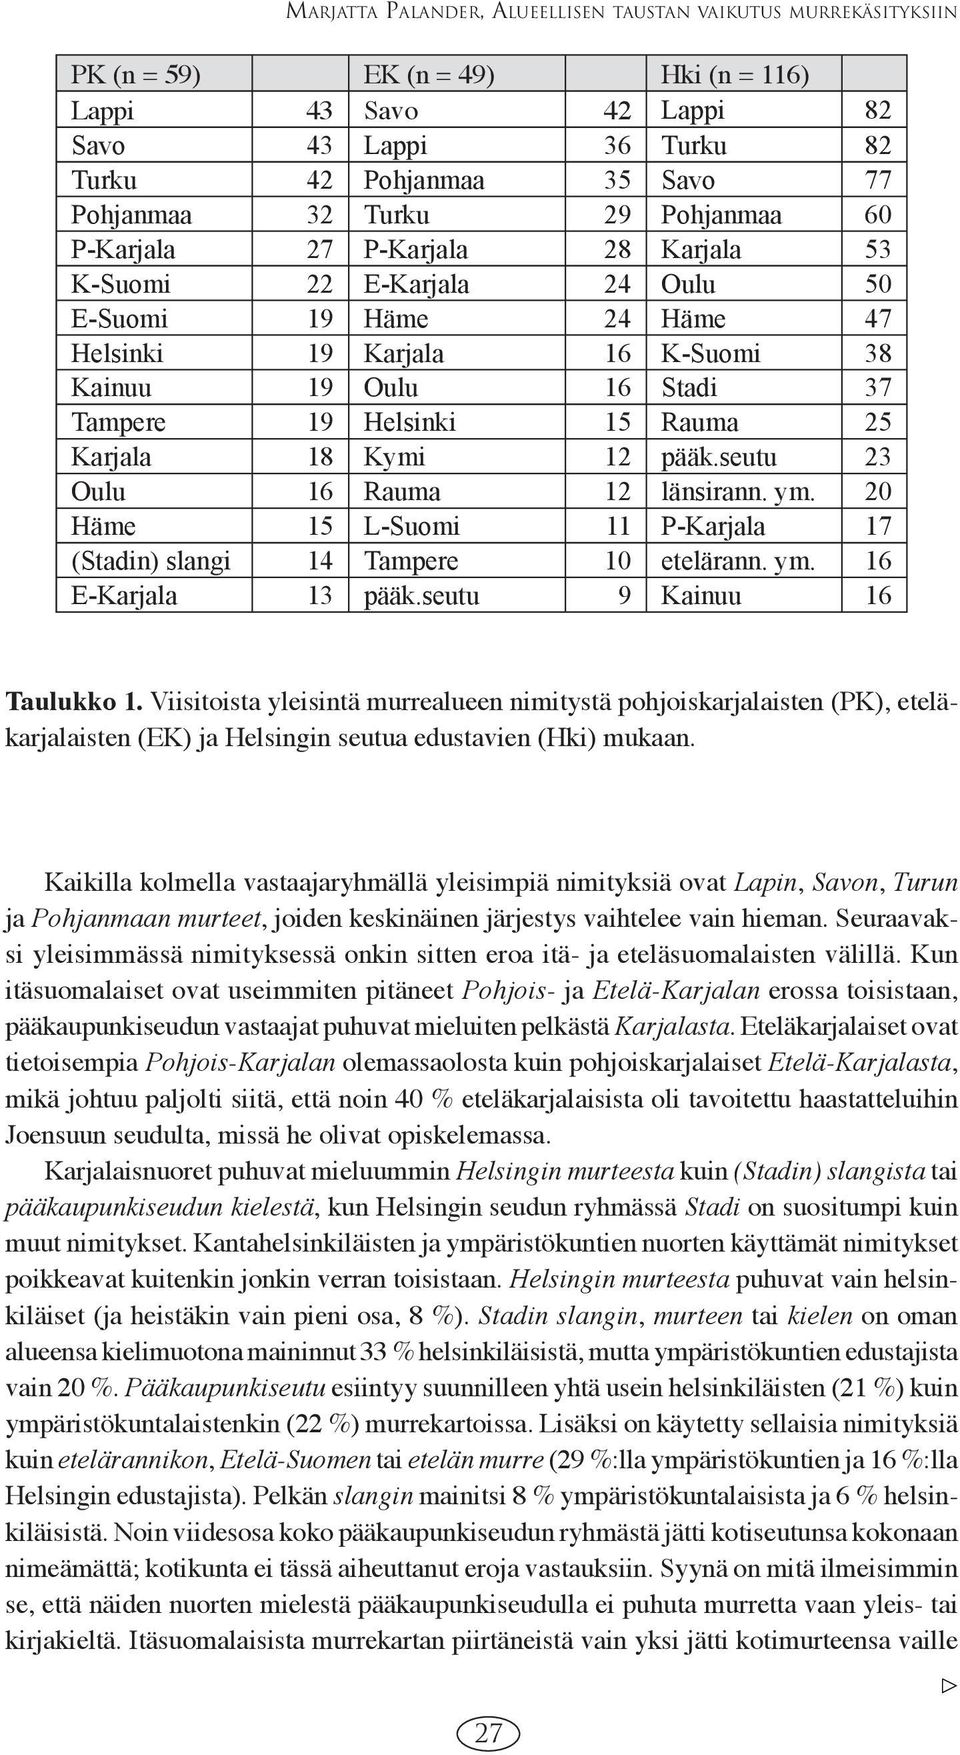 15 Rauma 25 Karjala 18 Kymi 12 pääk.seutu 23 Oulu 16 Rauma 12 länsirann. ym. 20 Häme 15 L-Suomi 11 P-Karjala 17 (Stadin) slangi 14 Tampere 10 etelärann. ym. 16 E-Karjala 13 pääk.